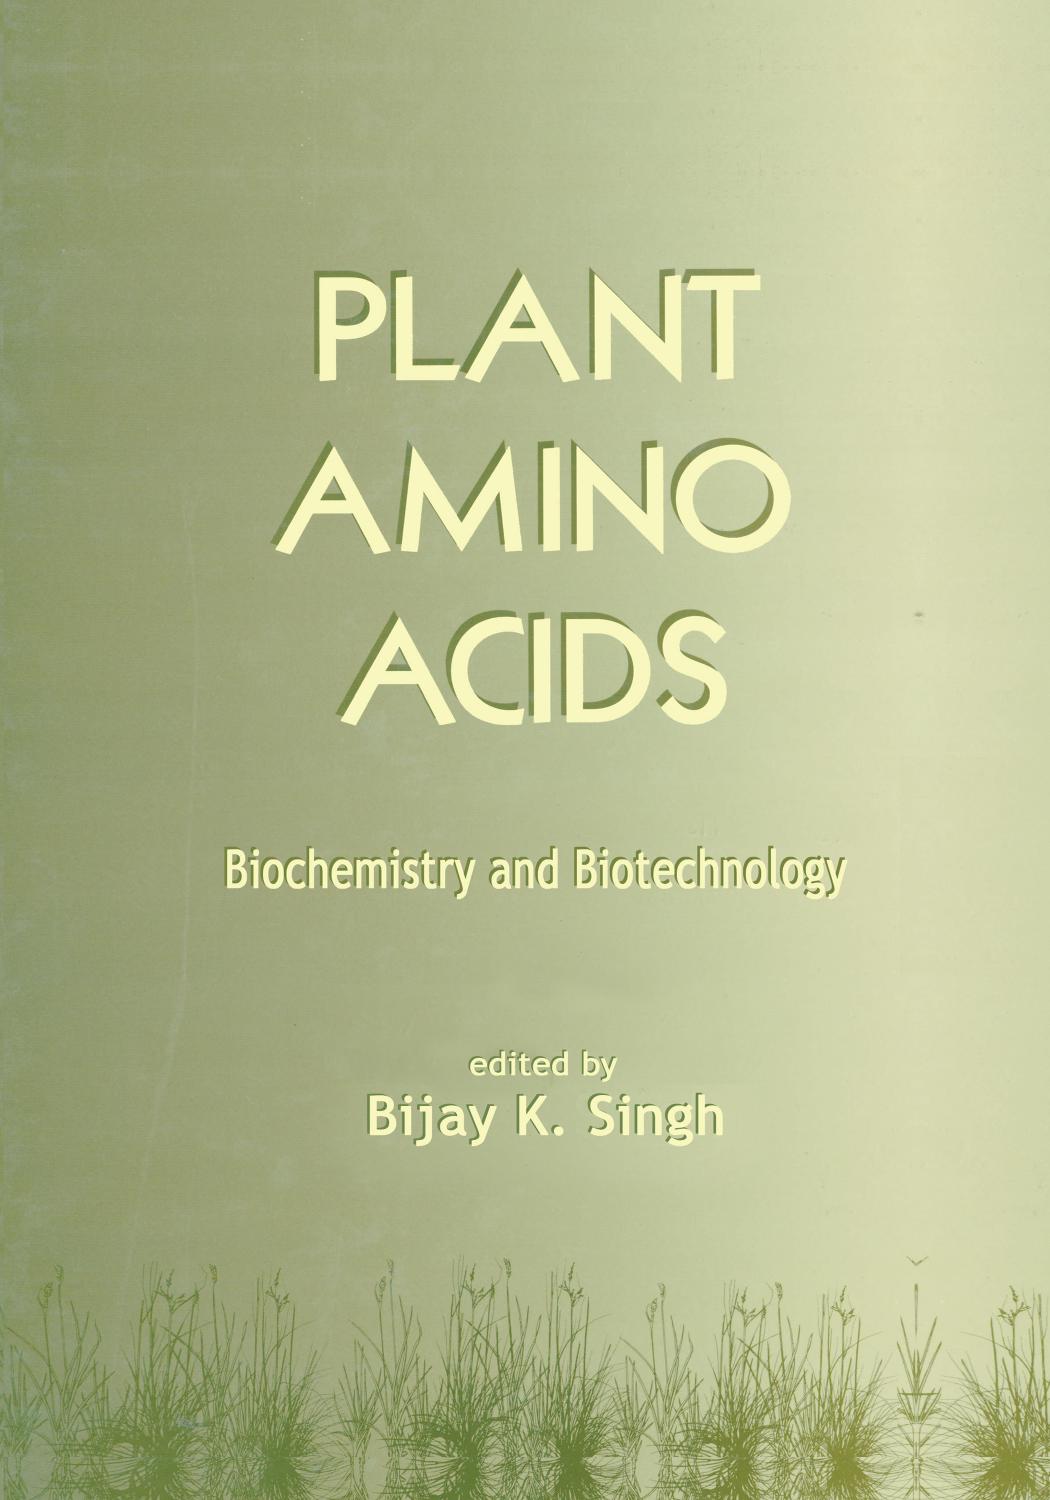 Plant amino acids : biochemistry and biotechnology